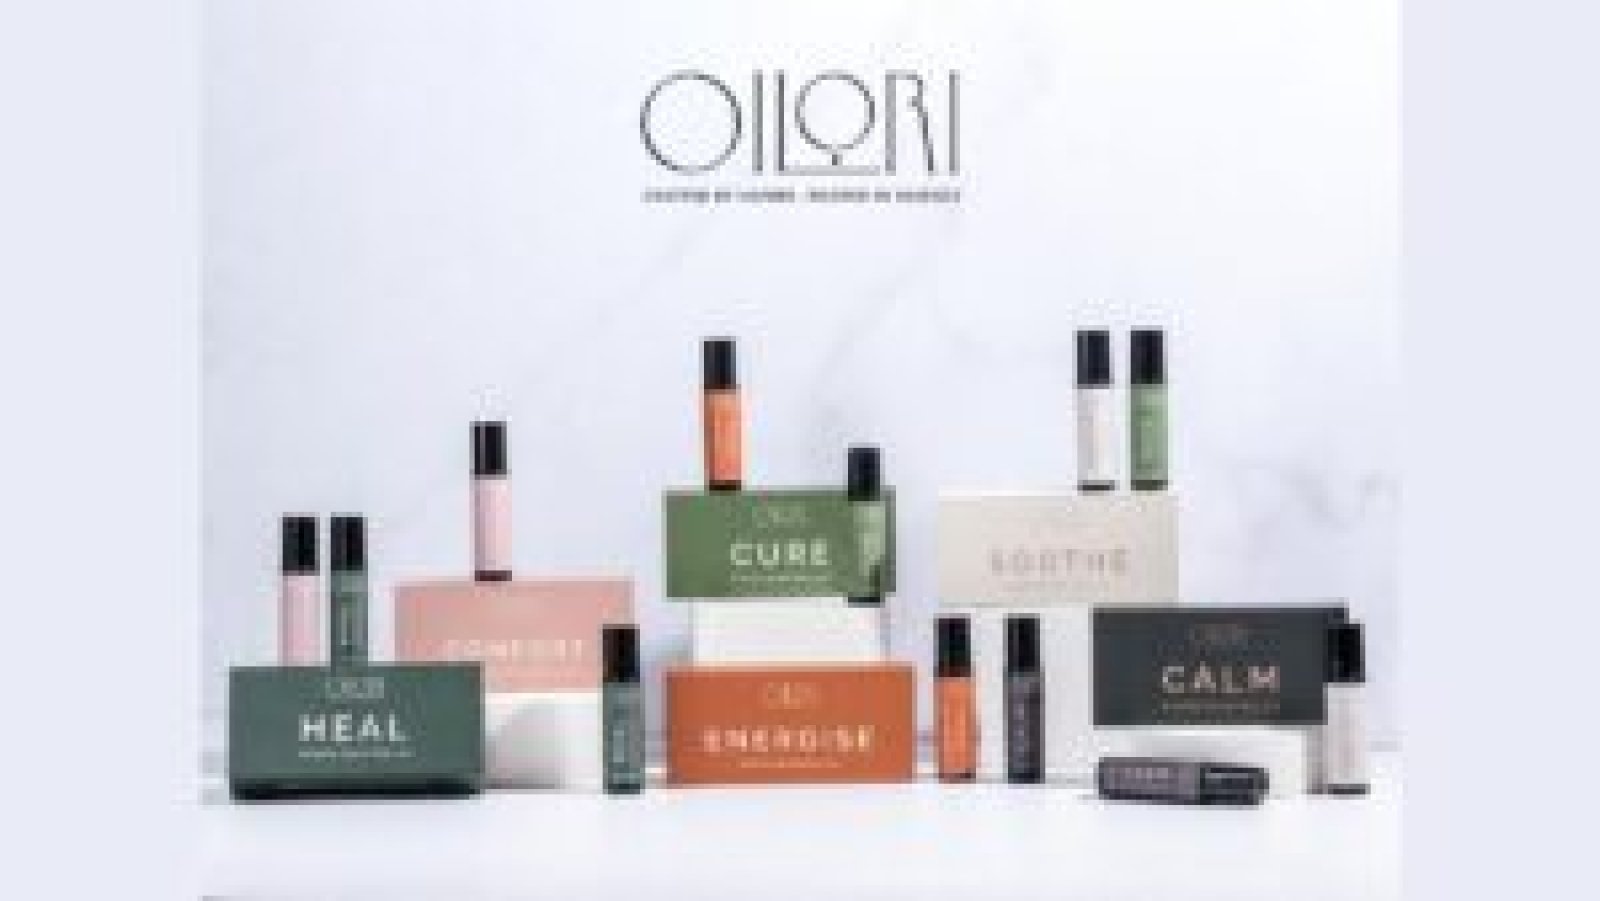 Oilori: The Essence Of Wellness